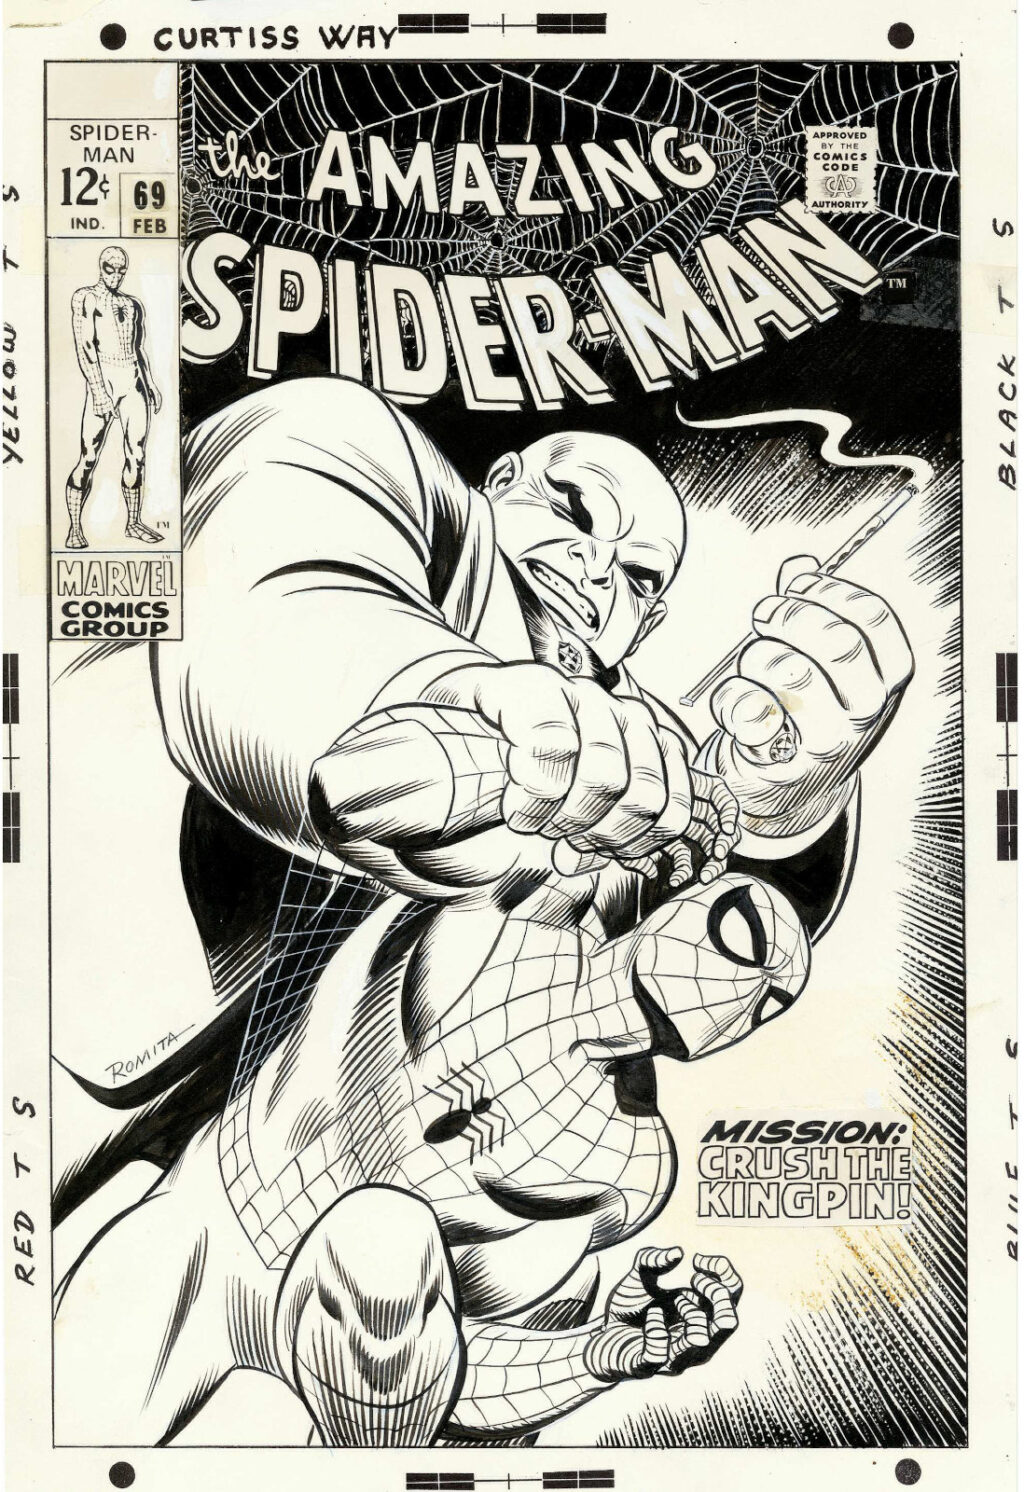 Amazing Spider Man issue 69 by John Romita